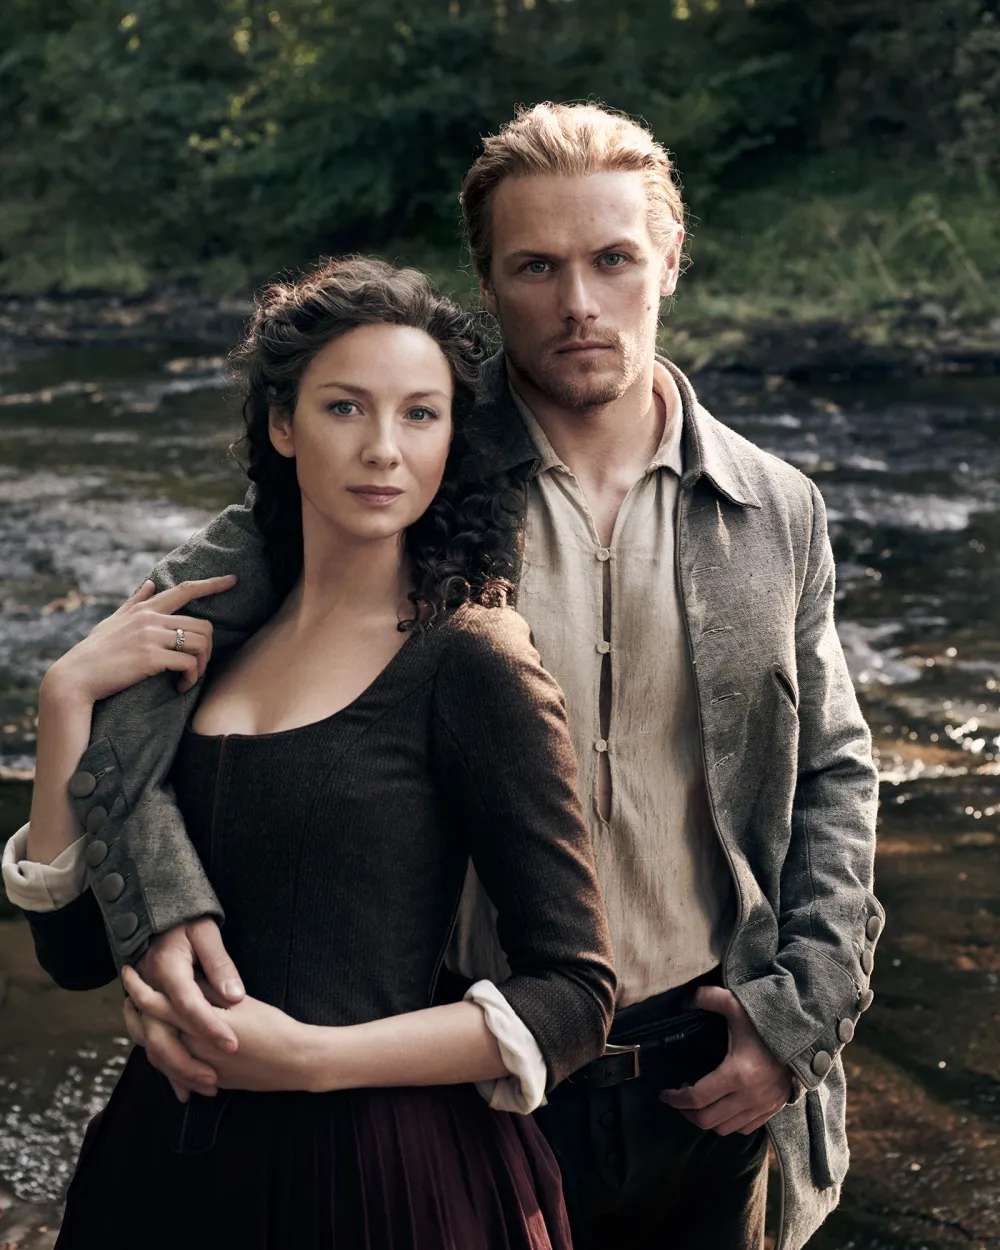 Outlander season 7 premiere: Tom Christie confesses love for Claire